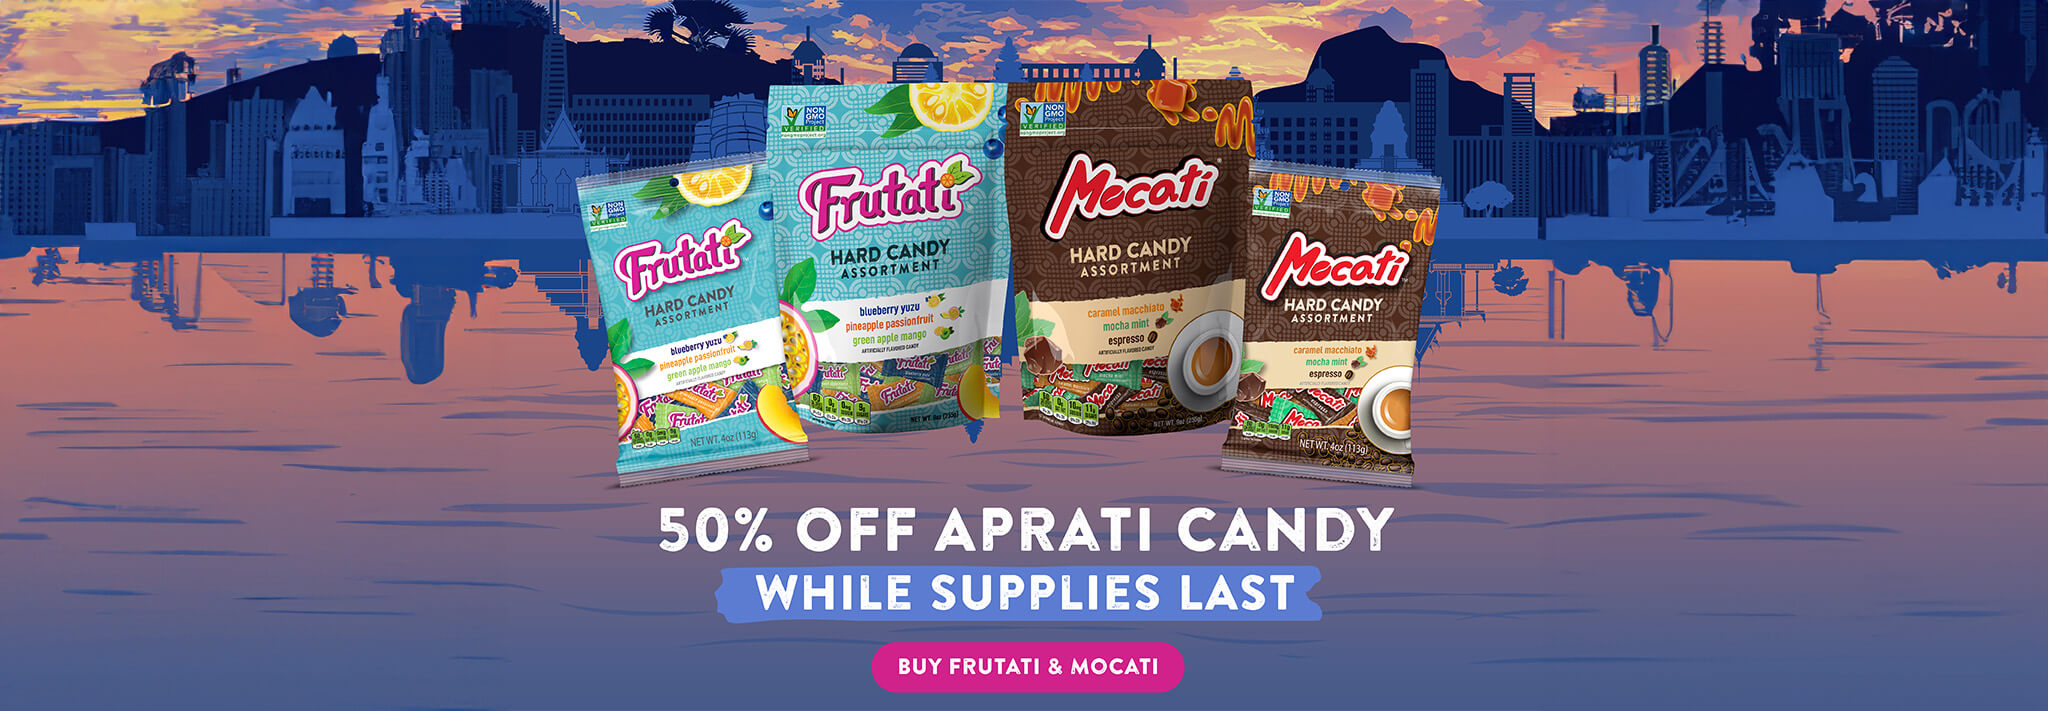 50% Off Aprati Candy while supplies last! Buy Frutati & Mocati now